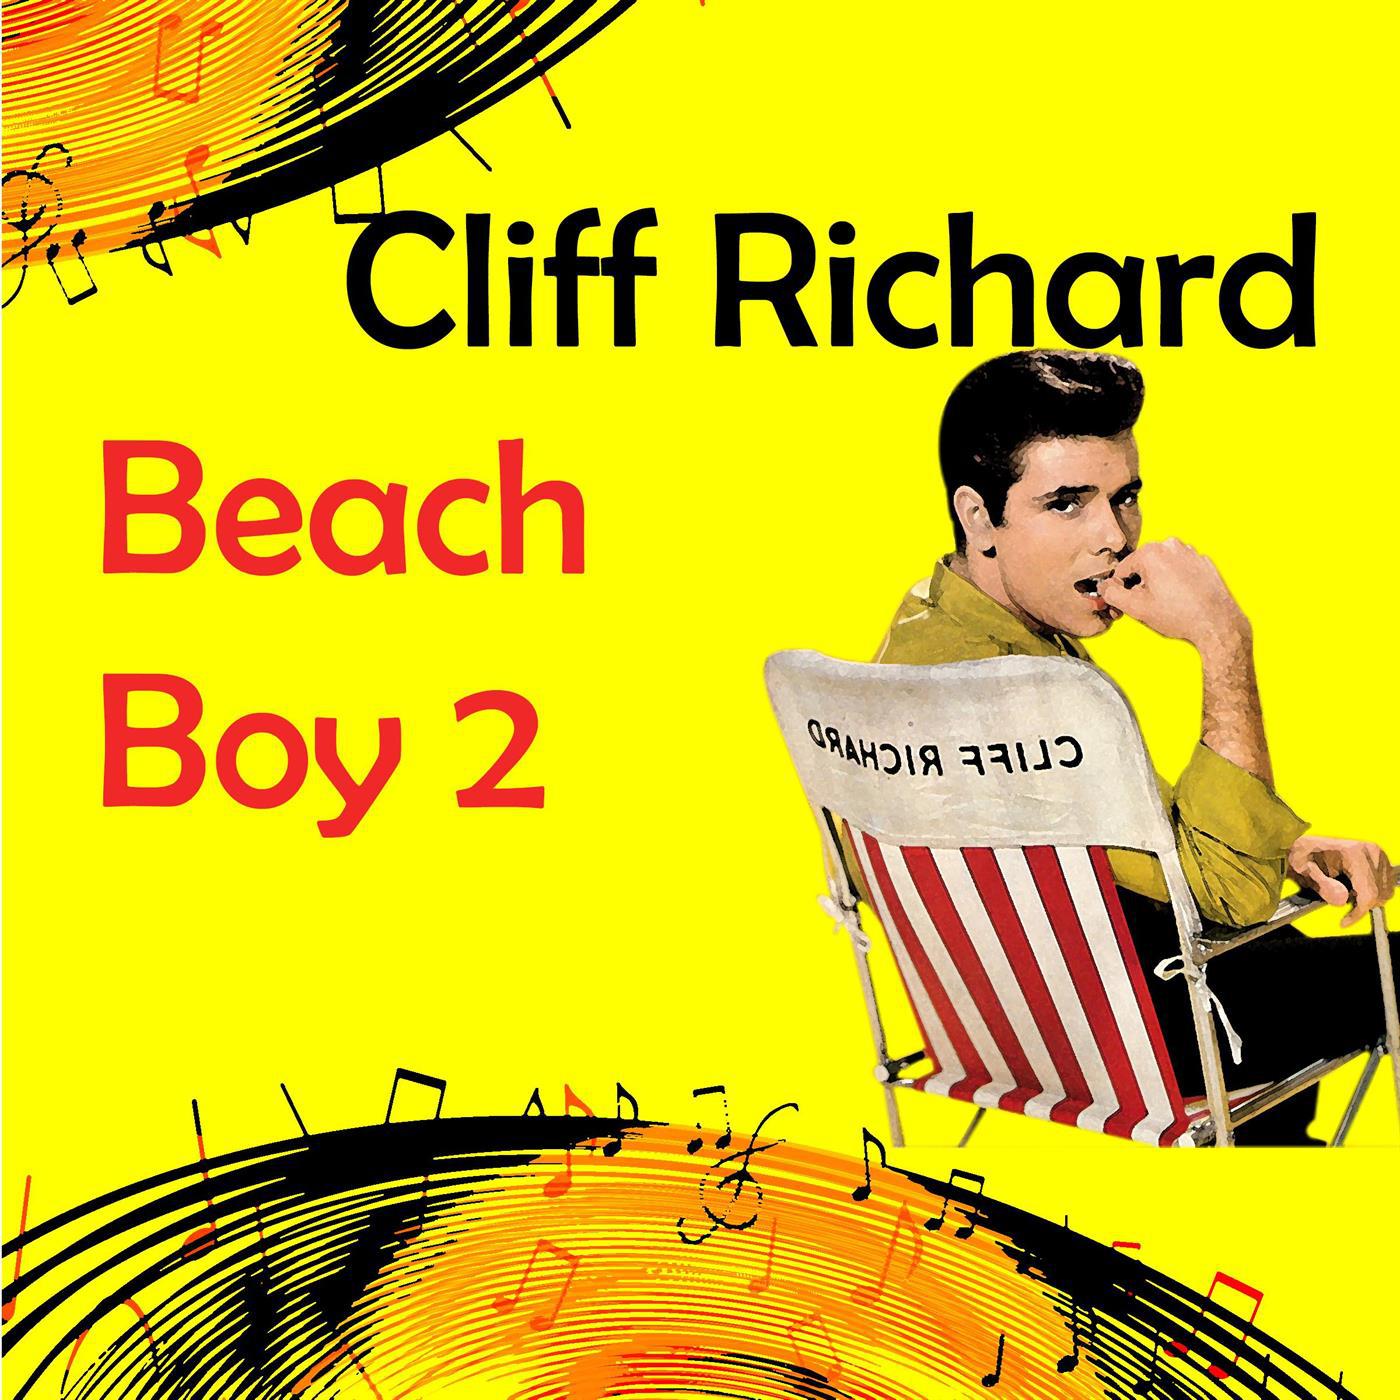 Cliff Richard - Beach Boy 2